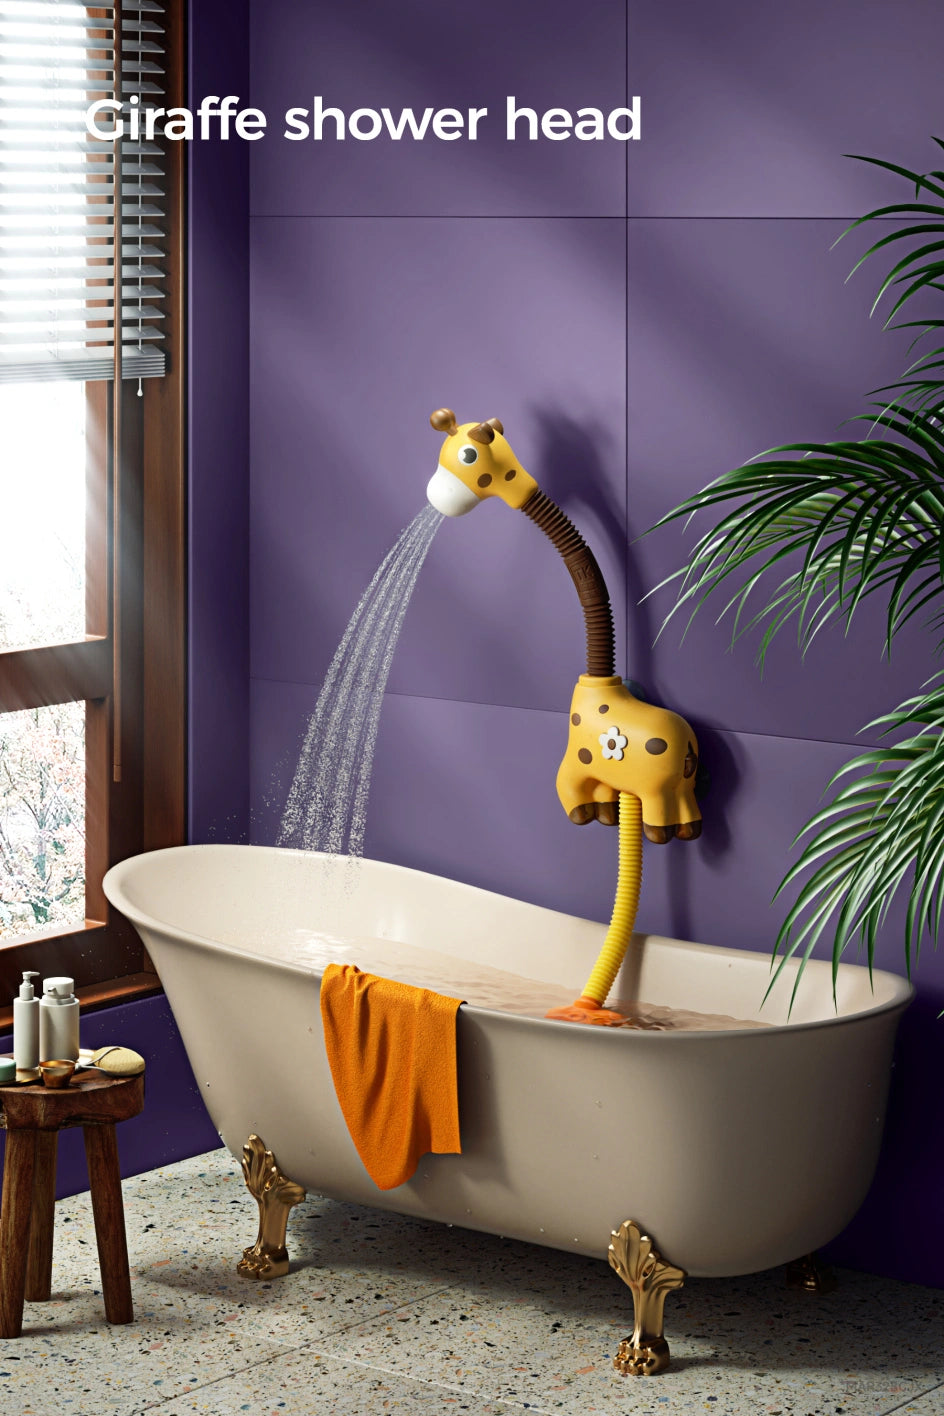 Baby Bath with Clockwork Spinning Toy giraffe shower head